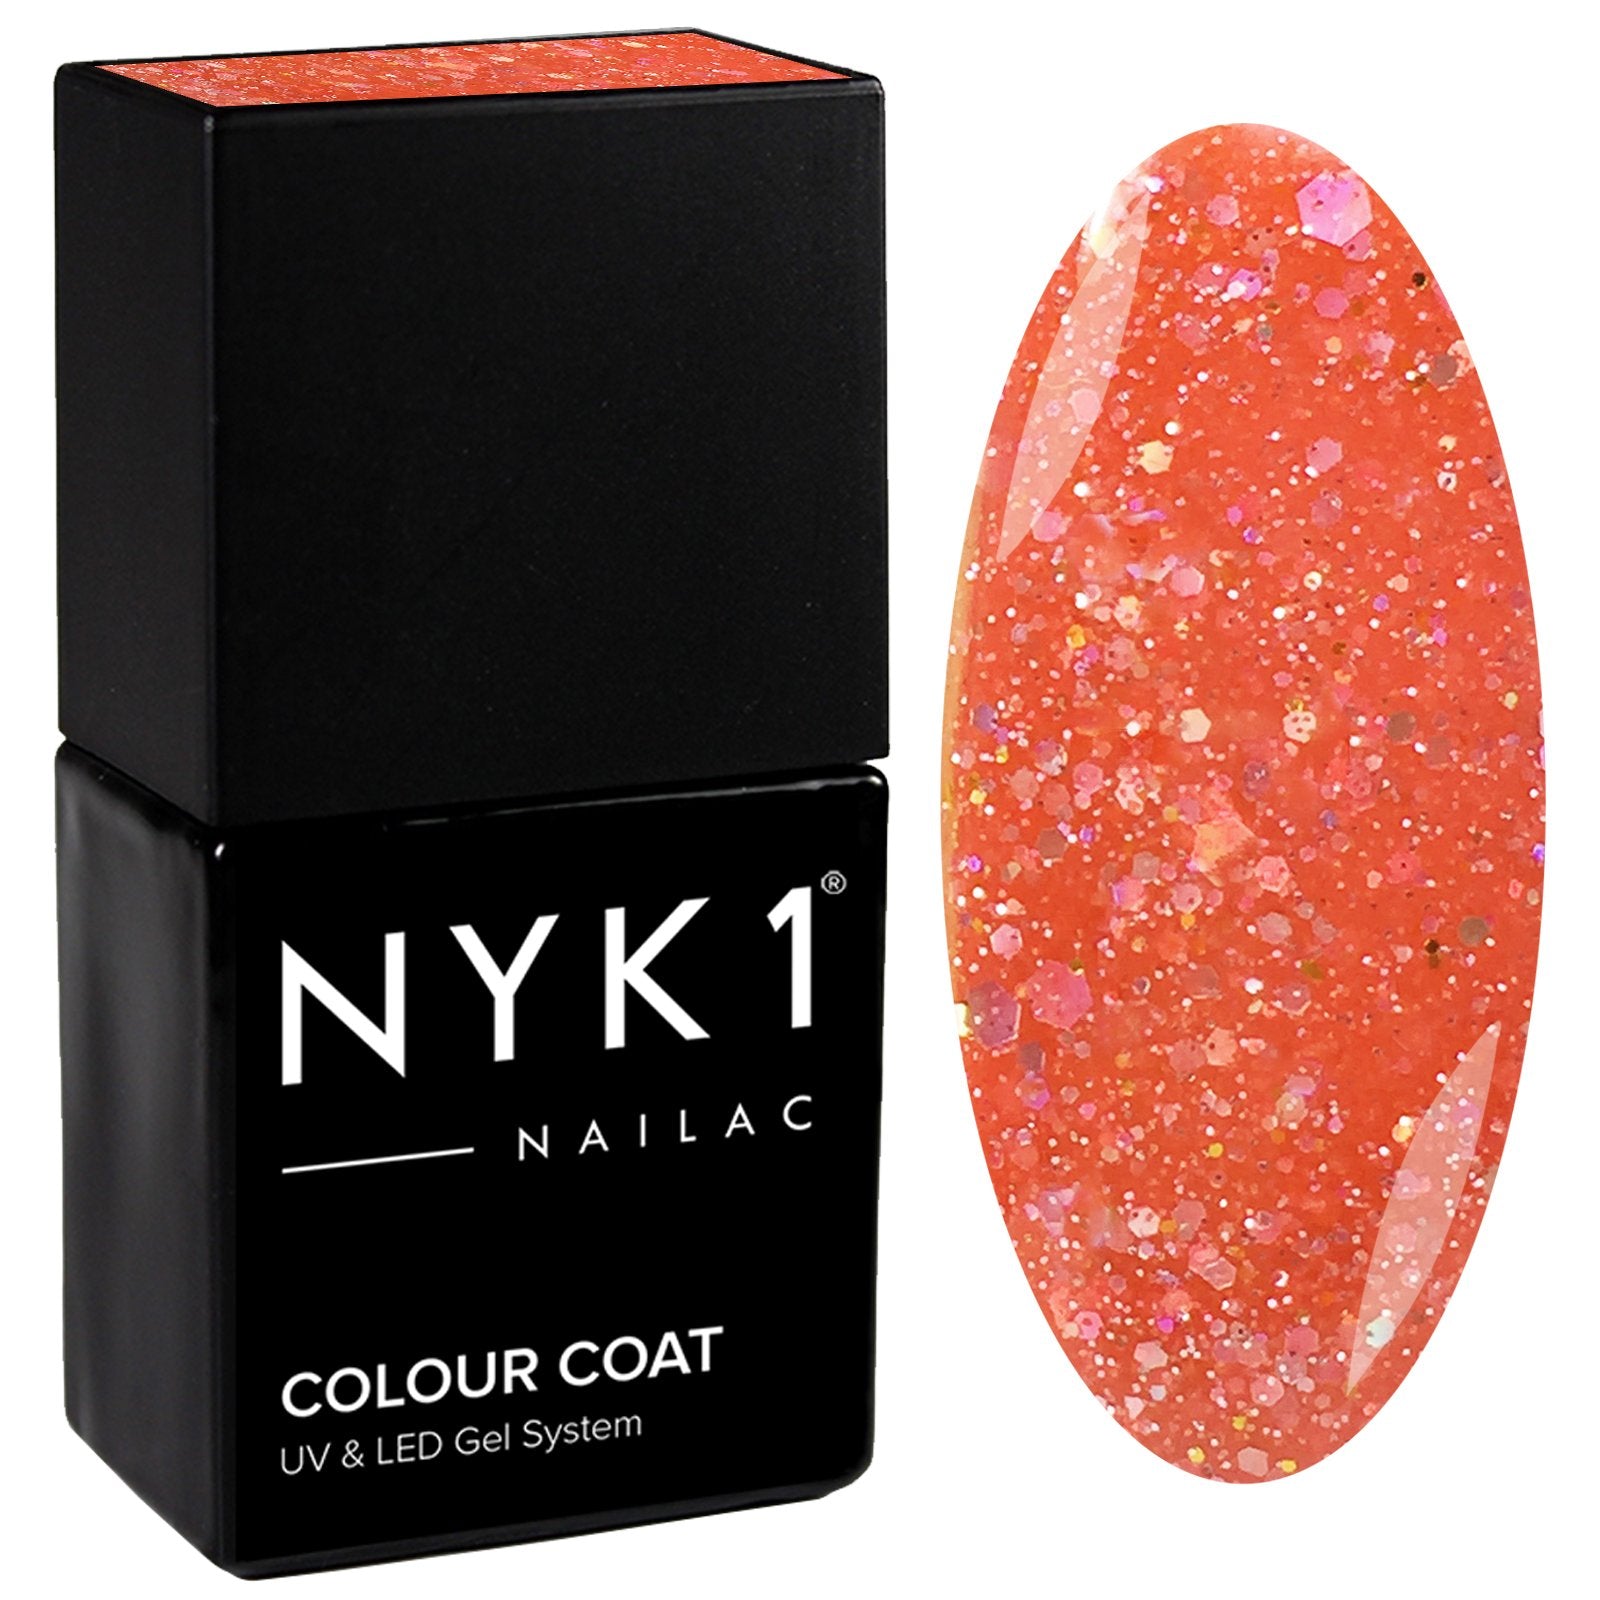 NYK1 Nailac Diamond Coral Peach Orange Sparkle Glitter Gel Nail Polish